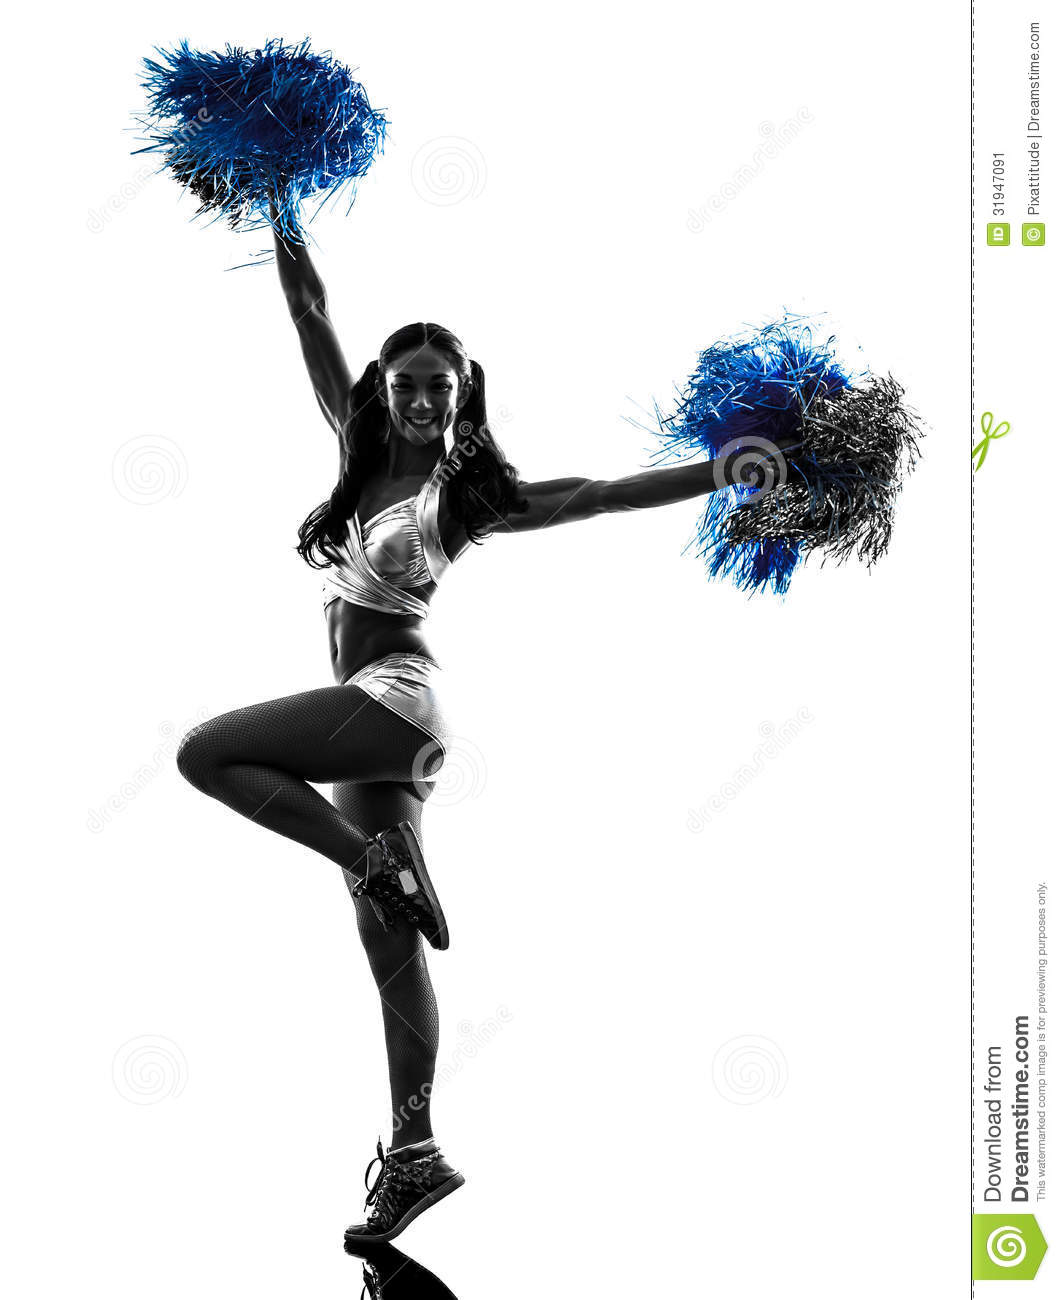 Young Woman Cheerleader Cheerleading Silhouette Stock Image   Image    